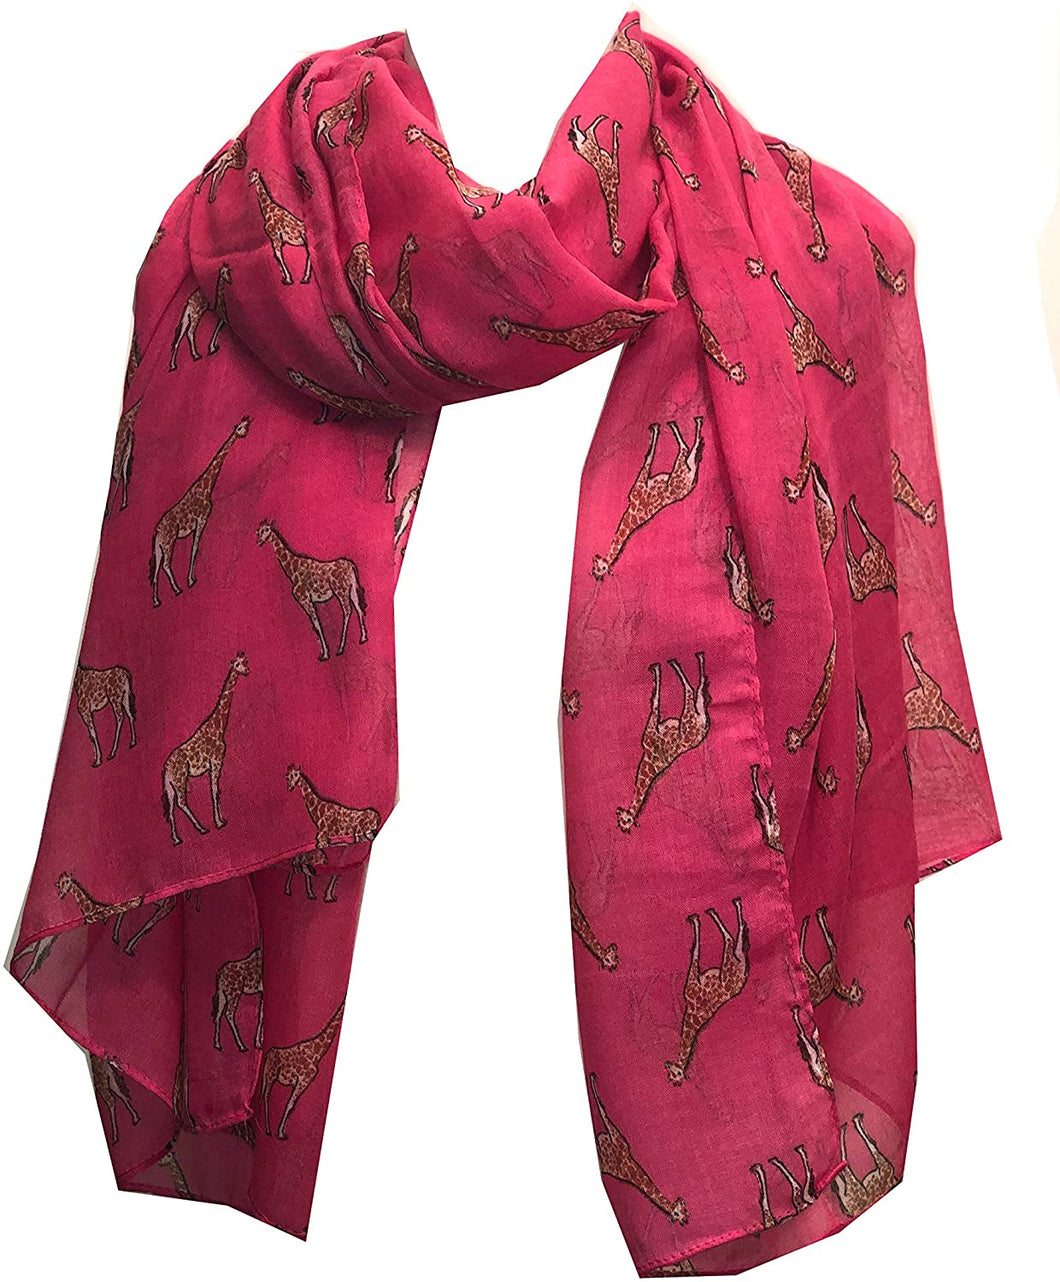 Pink giraffe long soft scarf